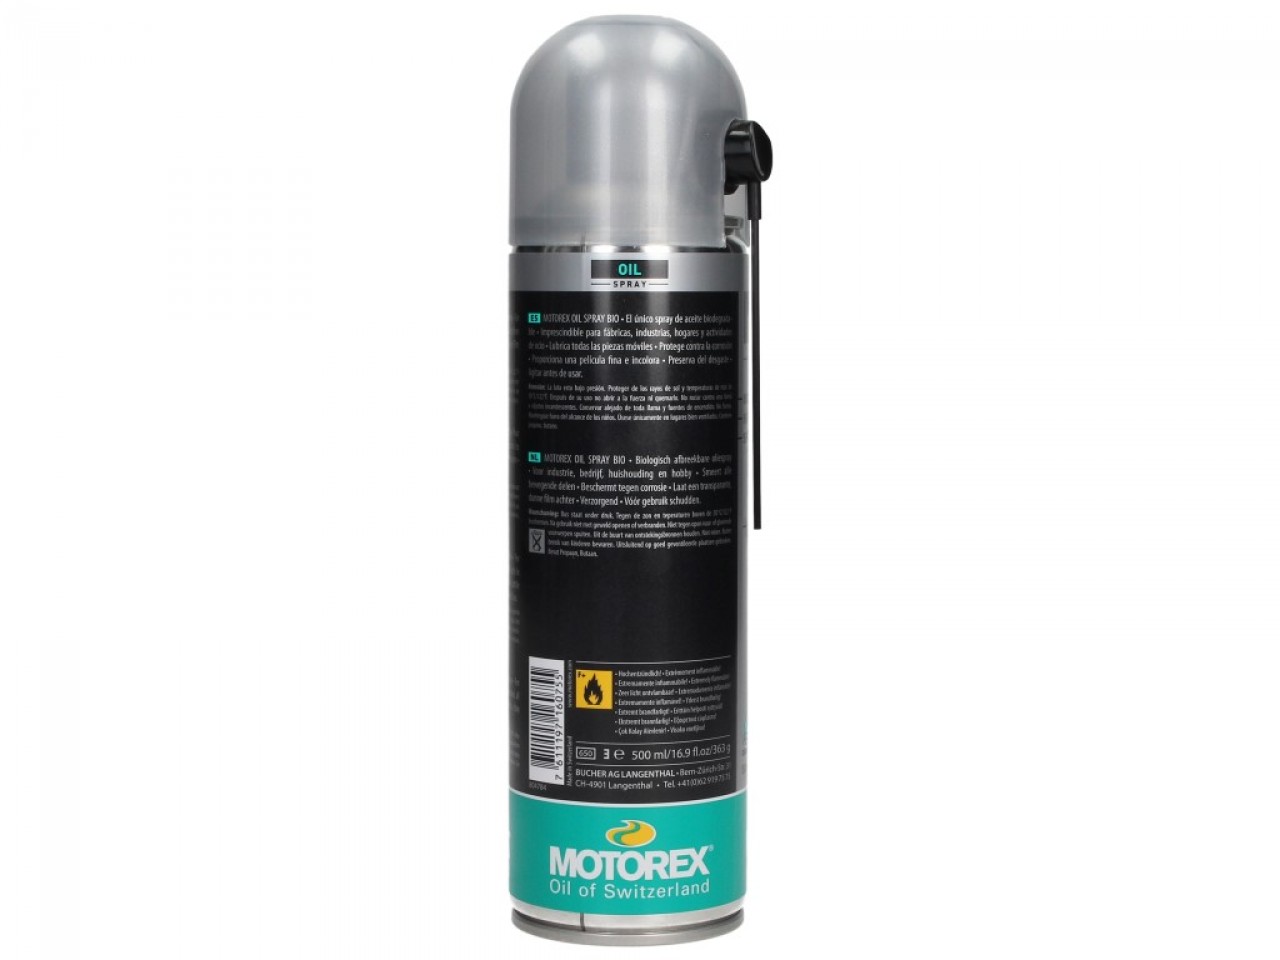 Motorex Huile en spray Oil Spray Bio 500 ml